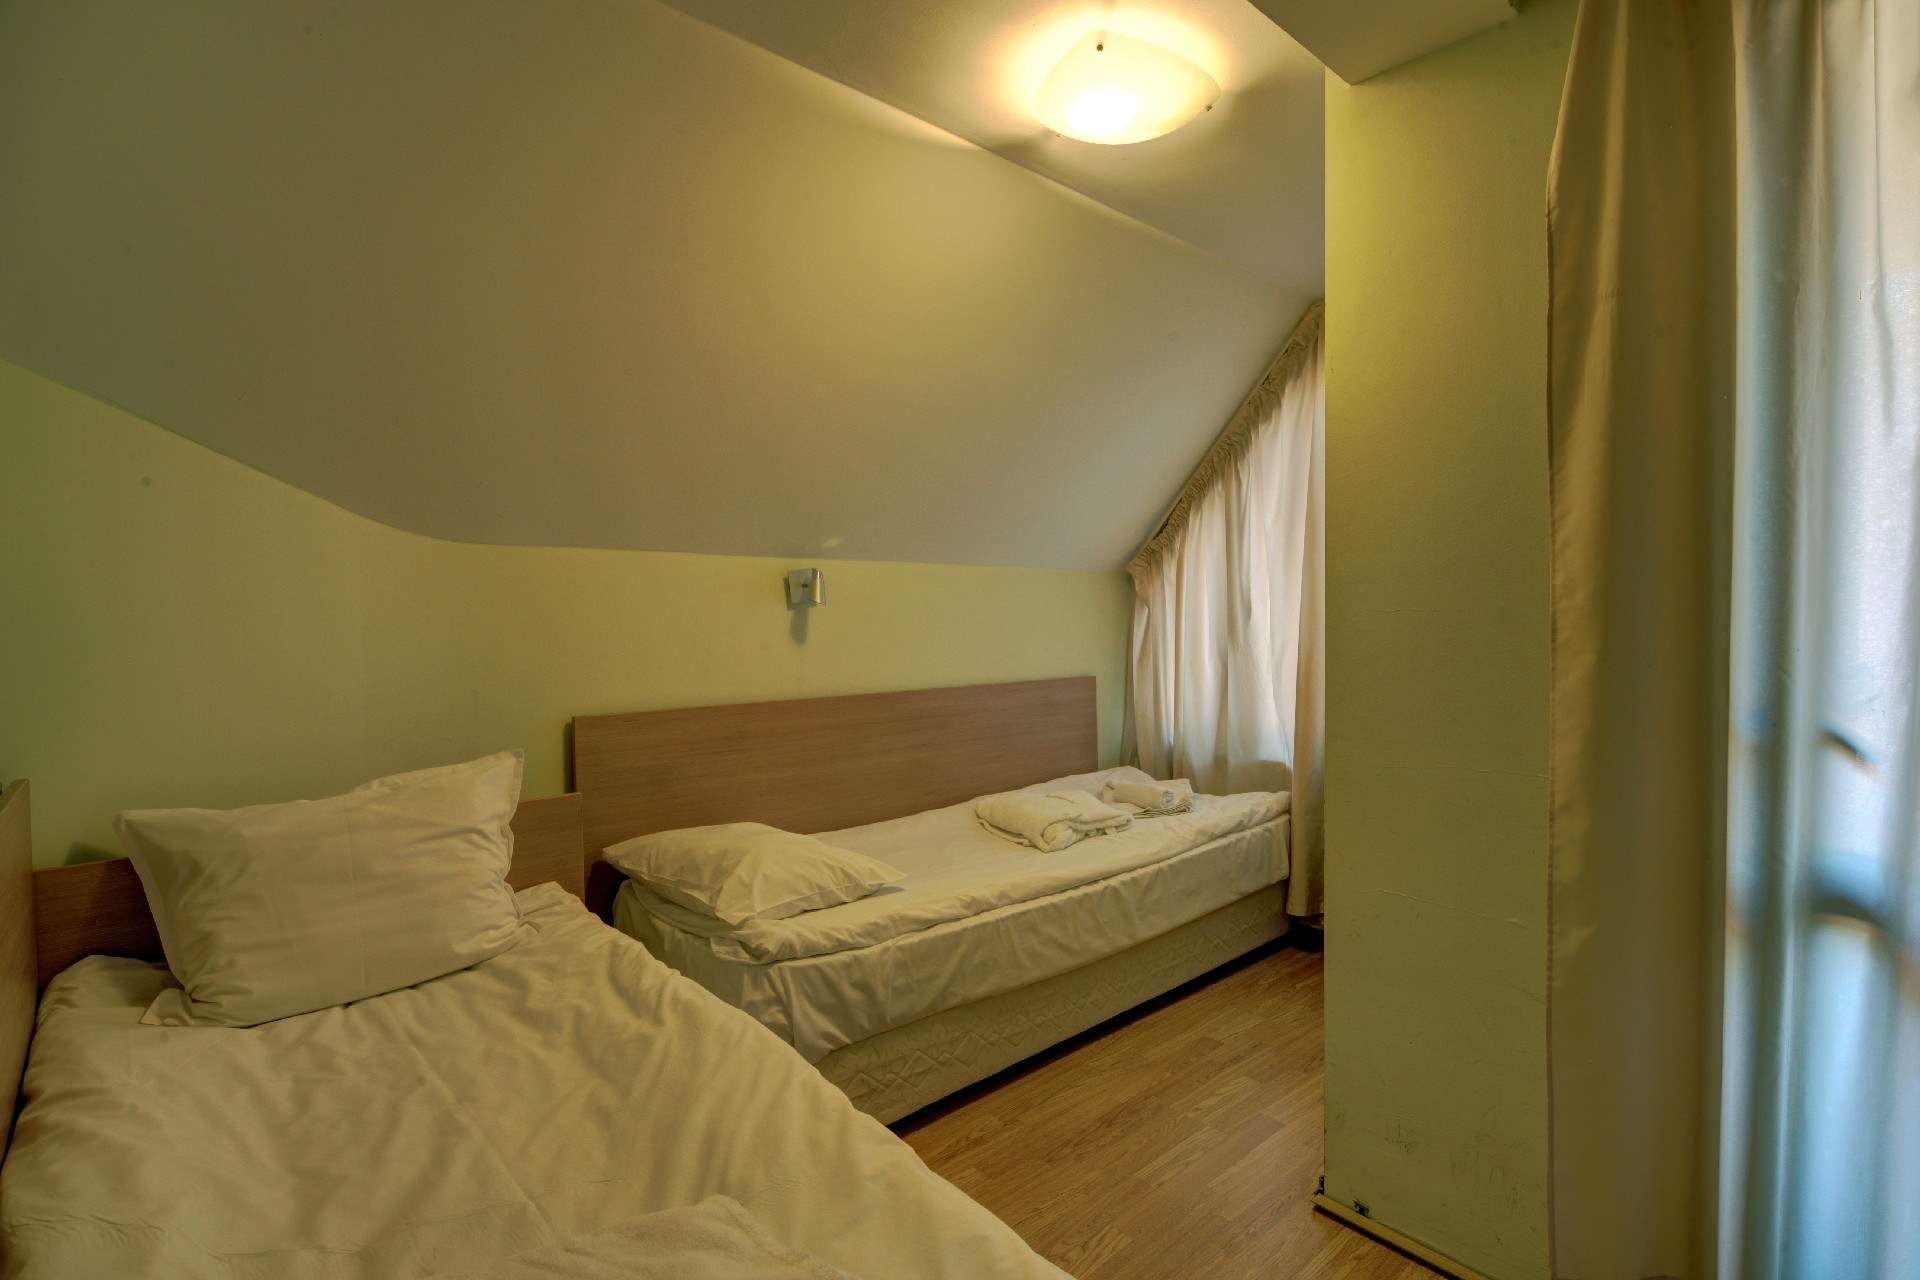 2 bedroom Apart, Redenka Holiday Club 3*